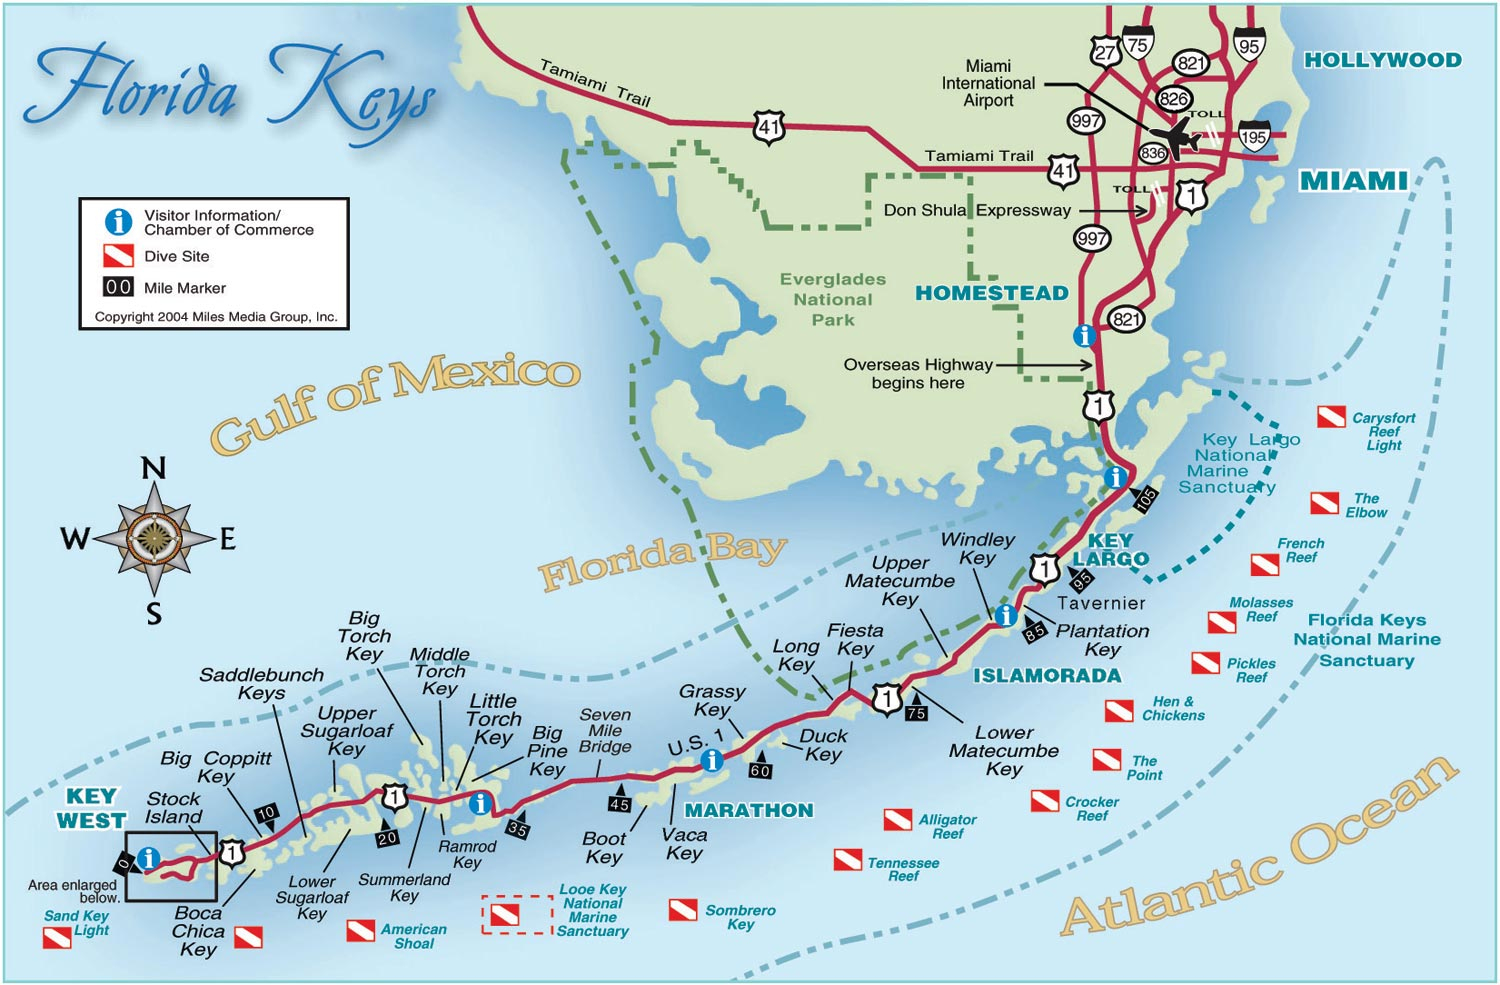 Florida Keys And Key West Real Estate And Tourist Information - Road Map Florida Keys